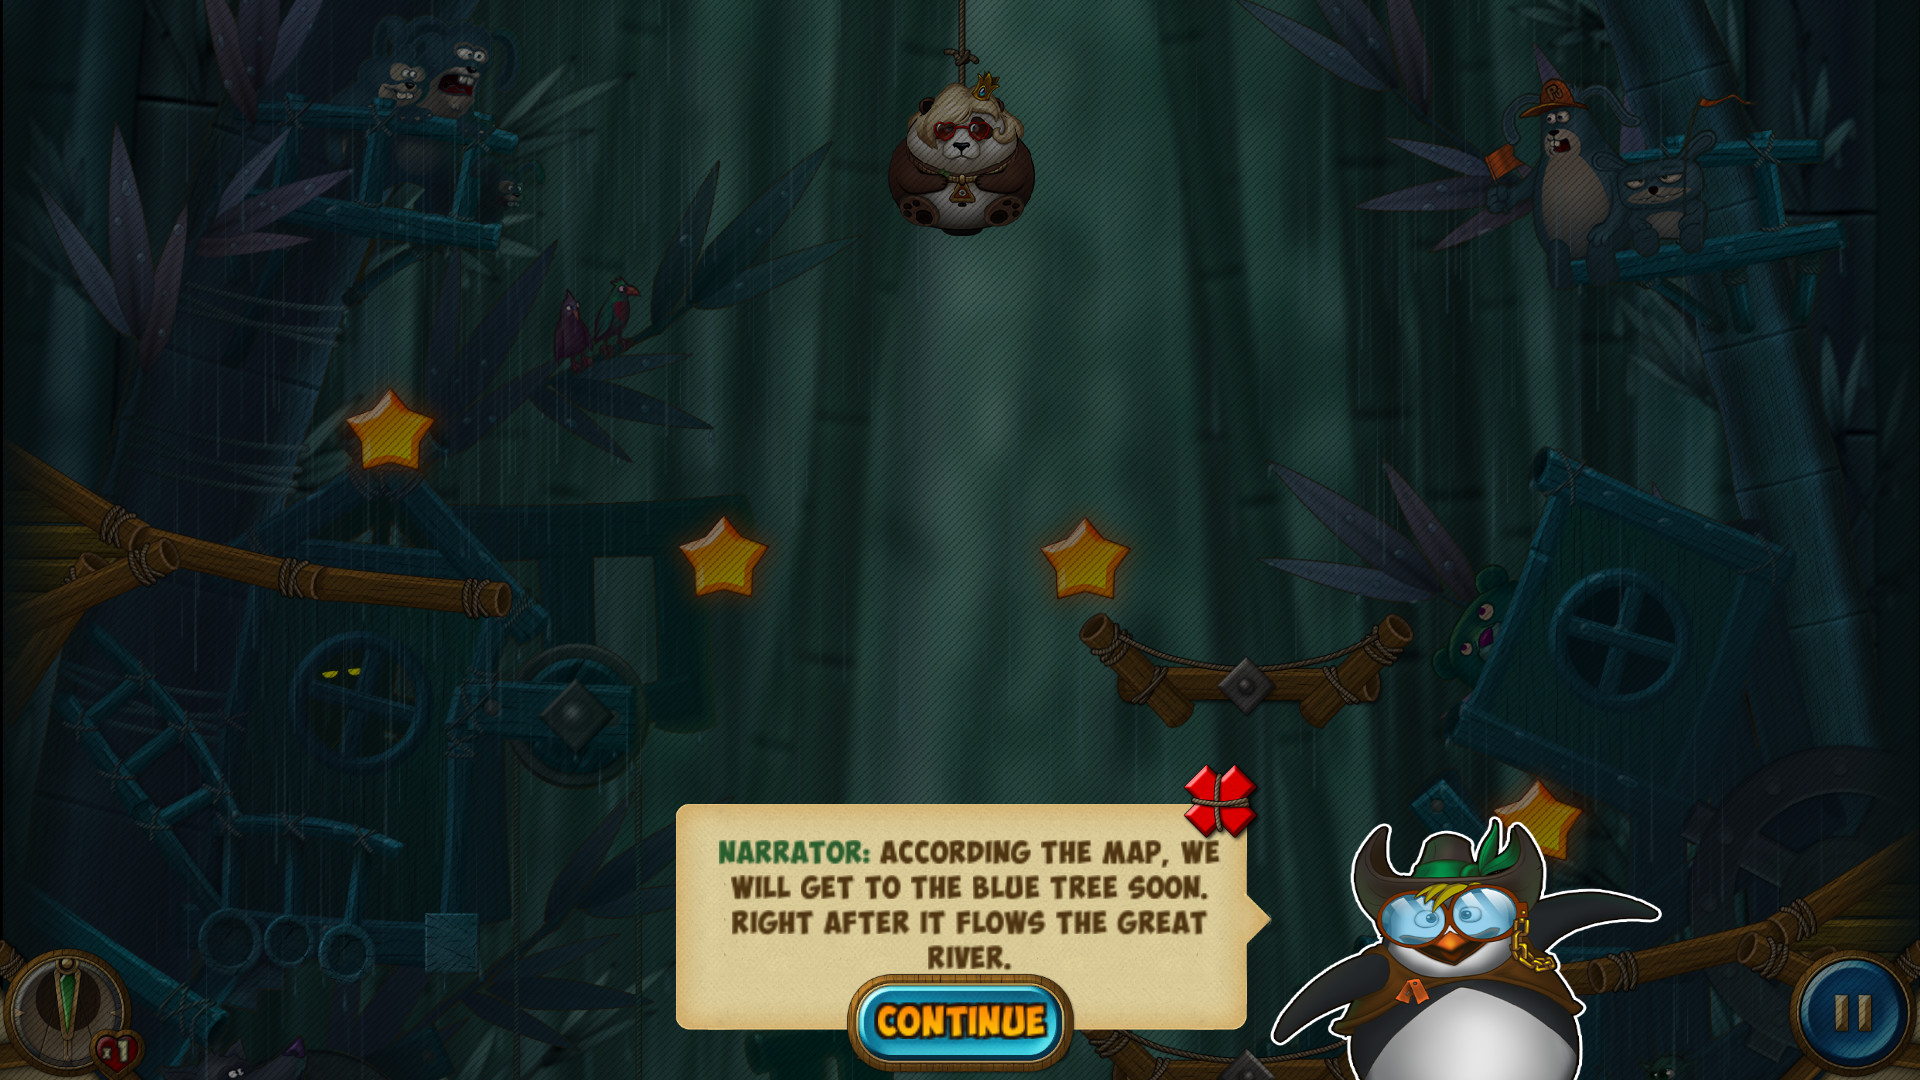 Pandarama: The Lost Toys screenshot